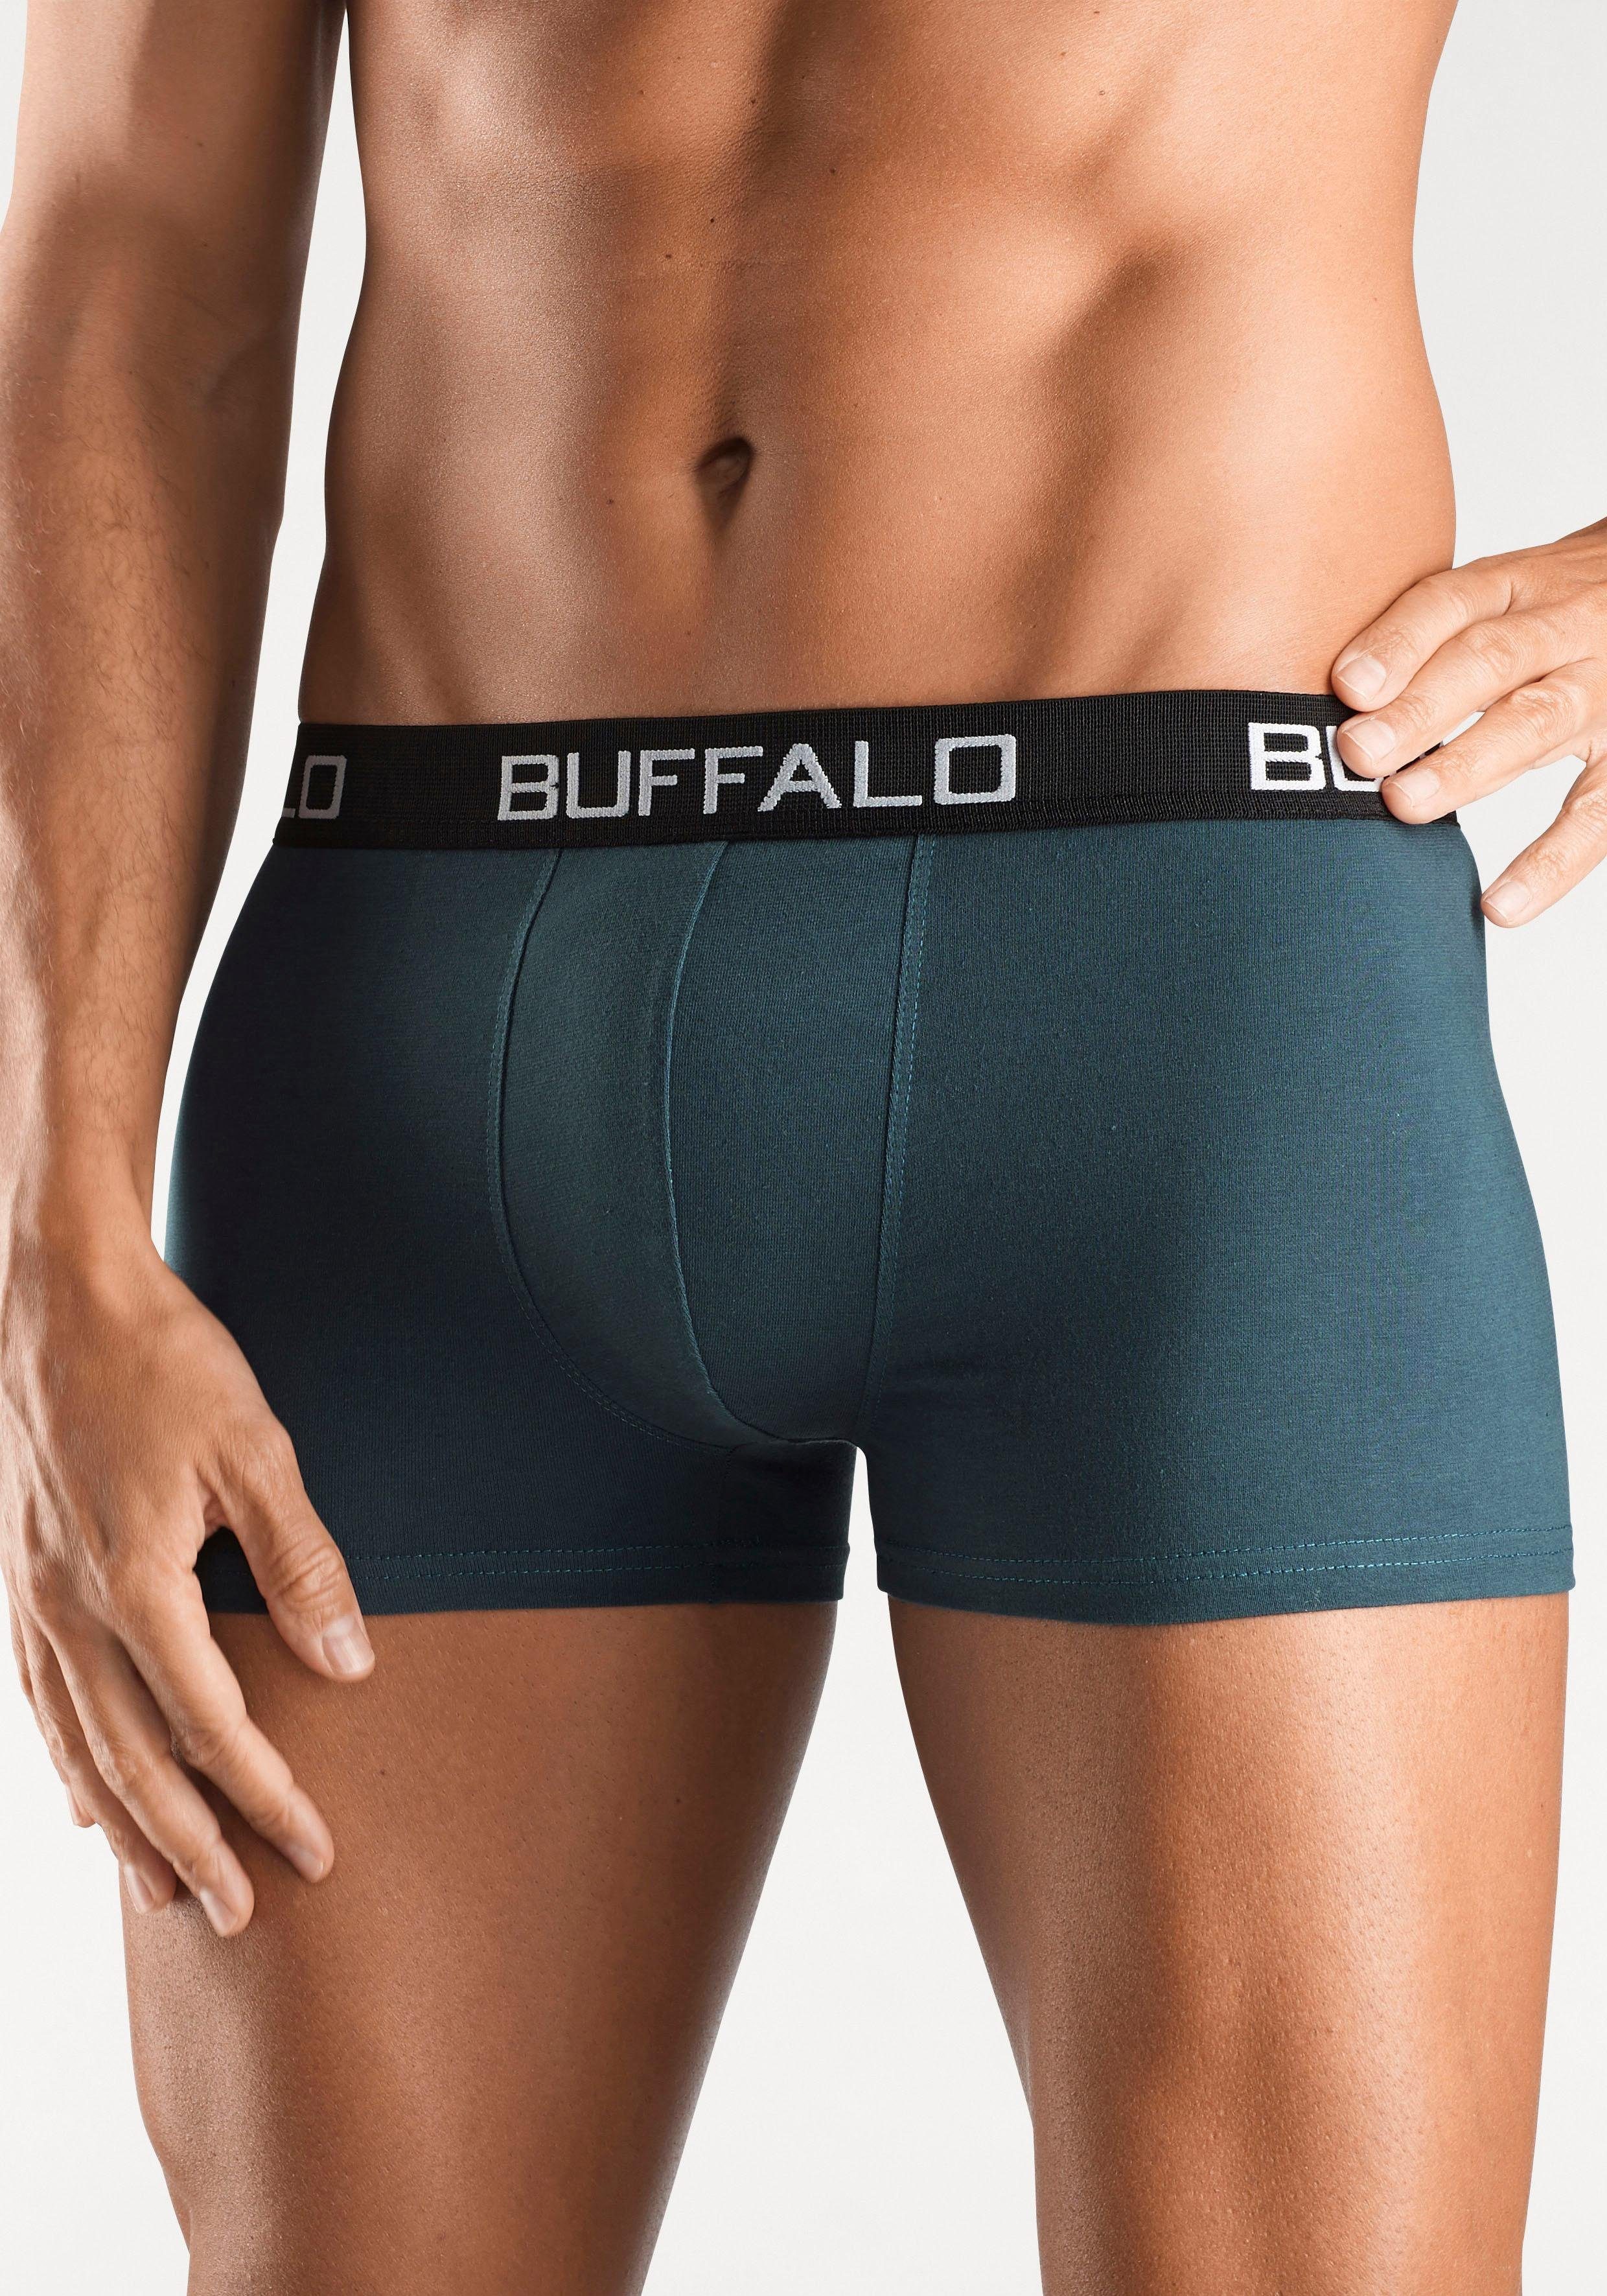 Wäsche/Bademode Boxershorts Buffalo Boxer (4 Stück) unifarbene Retro Pants